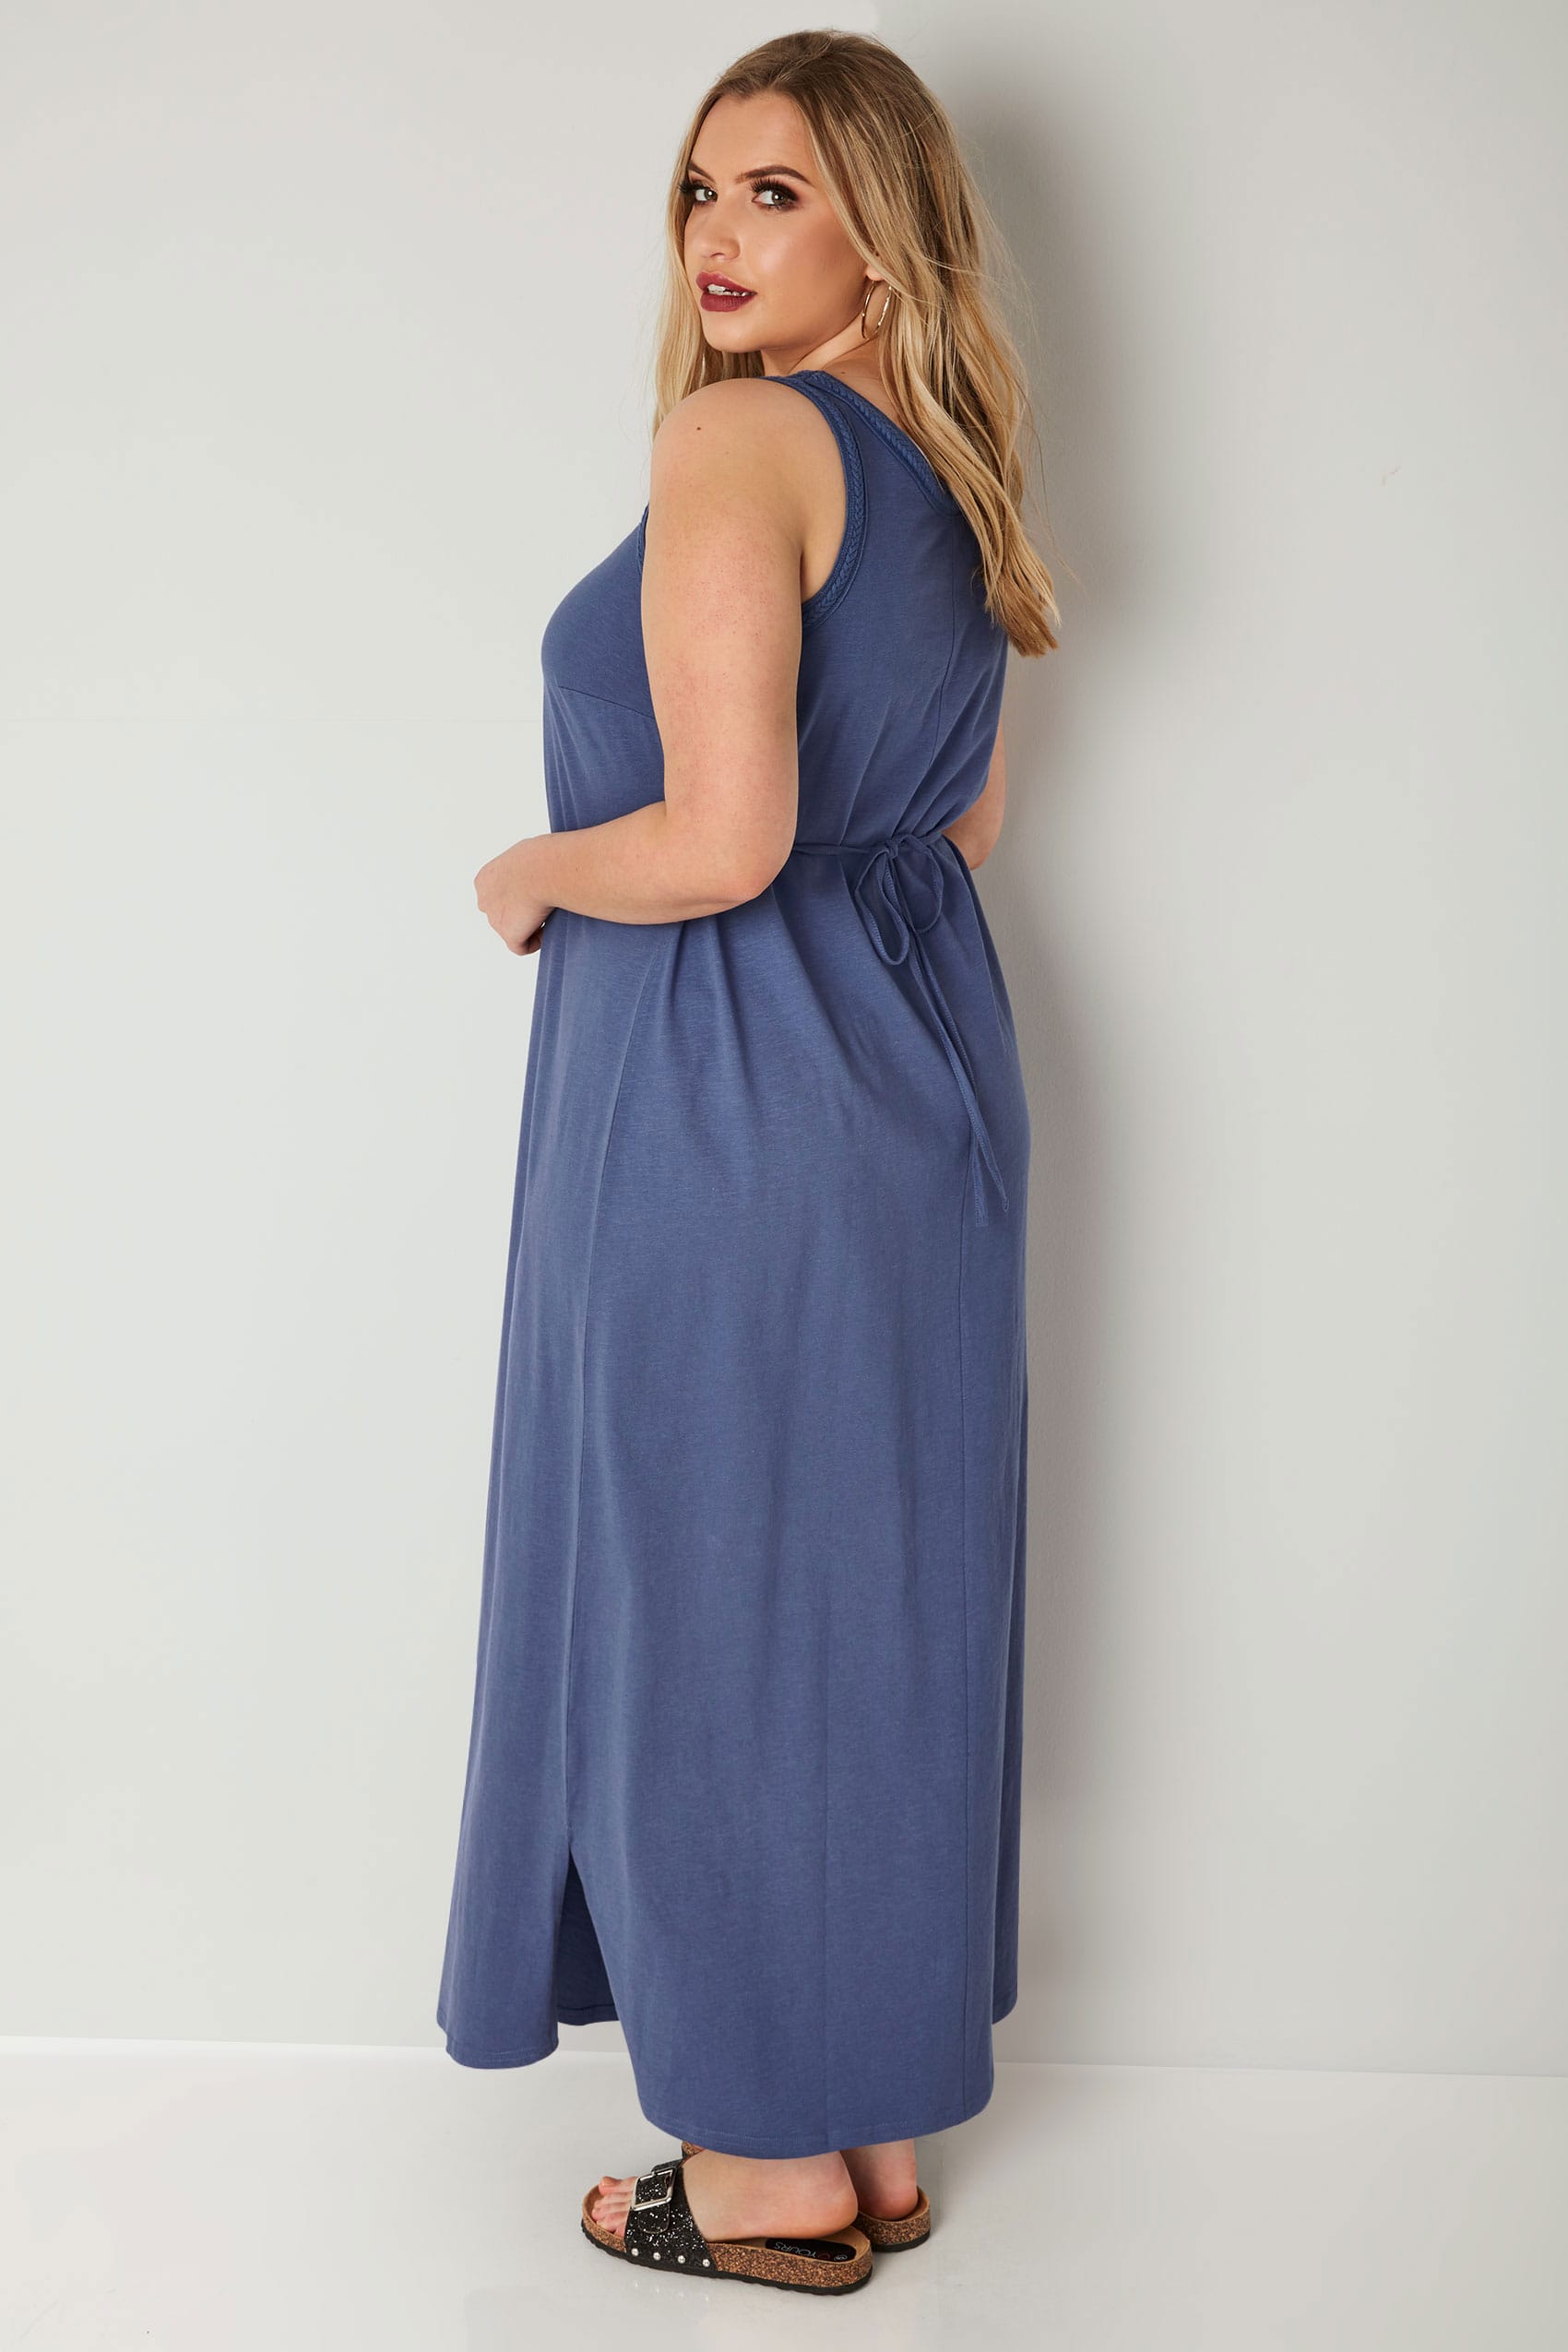 Blue Chambray Sleeveless Maxi Dress With Plait Trim Plus